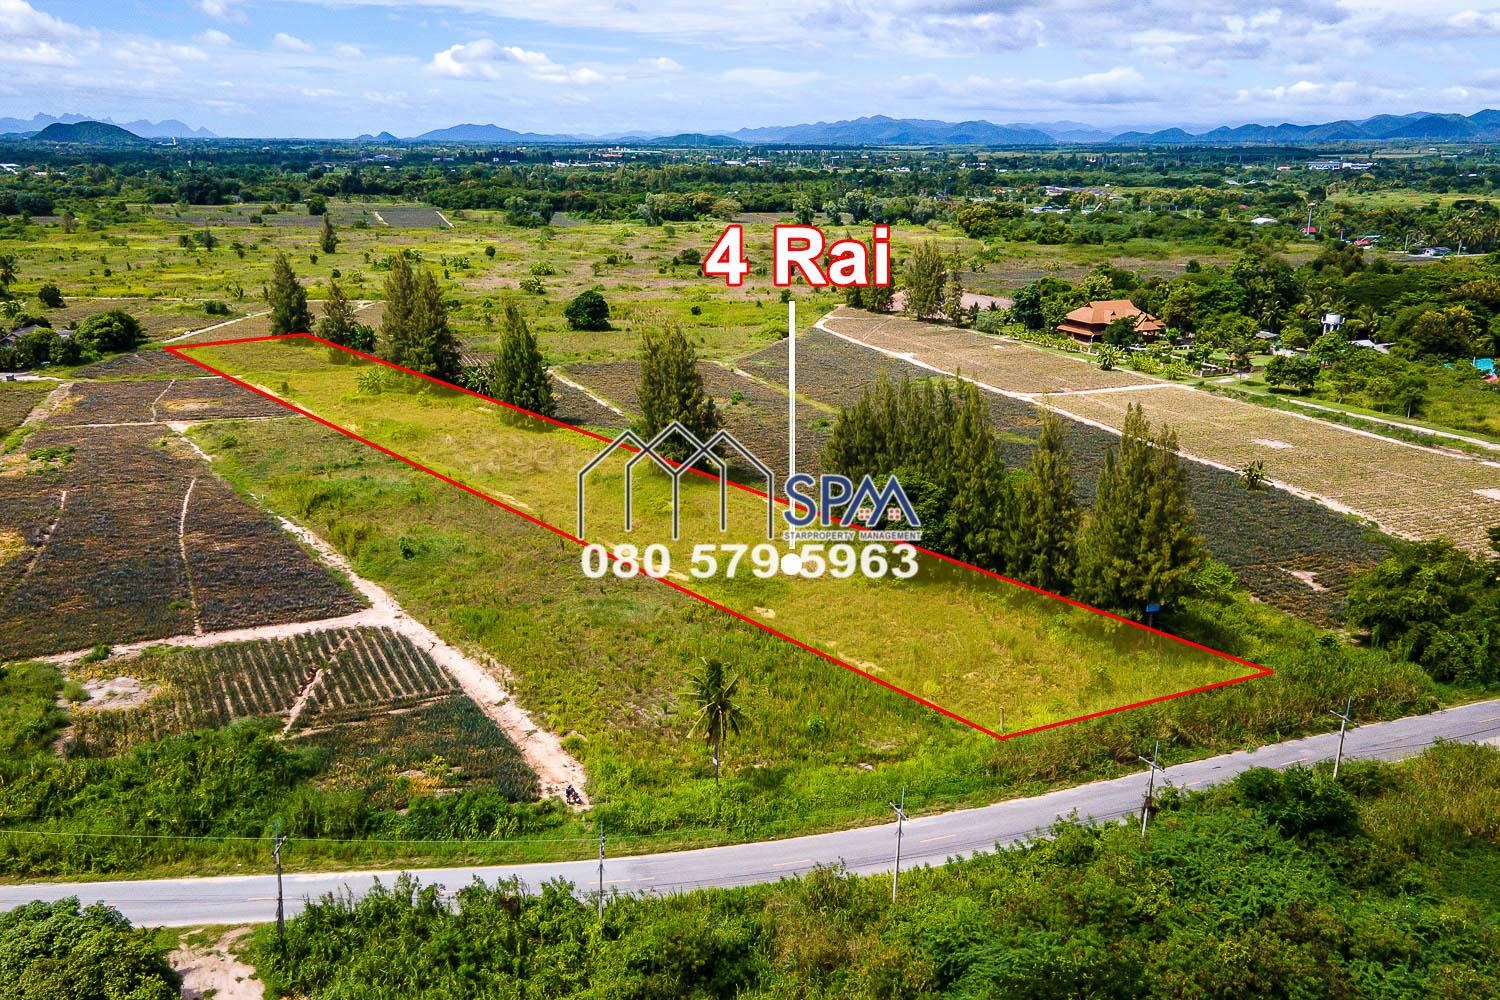 Land for sale near Black Mountain golf course, Land Area 4 Rai (6400 sq.m) Price 1,700,000 Baht per Rai